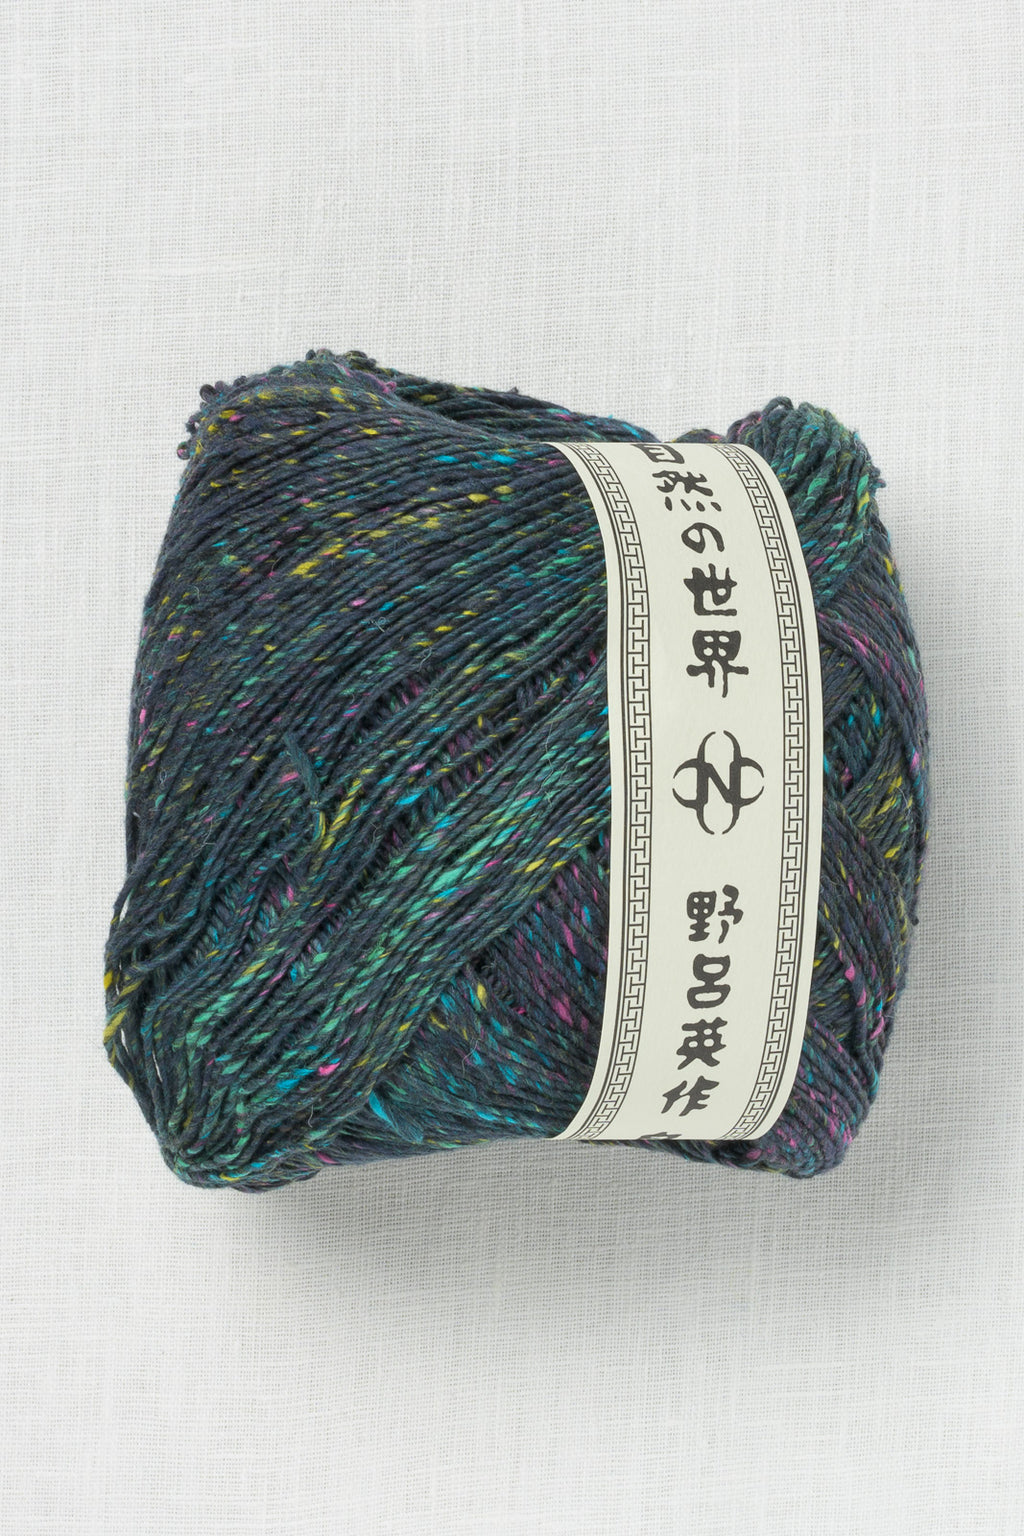 Noro Kakigori 05 Shimonoseki – Wool and Company